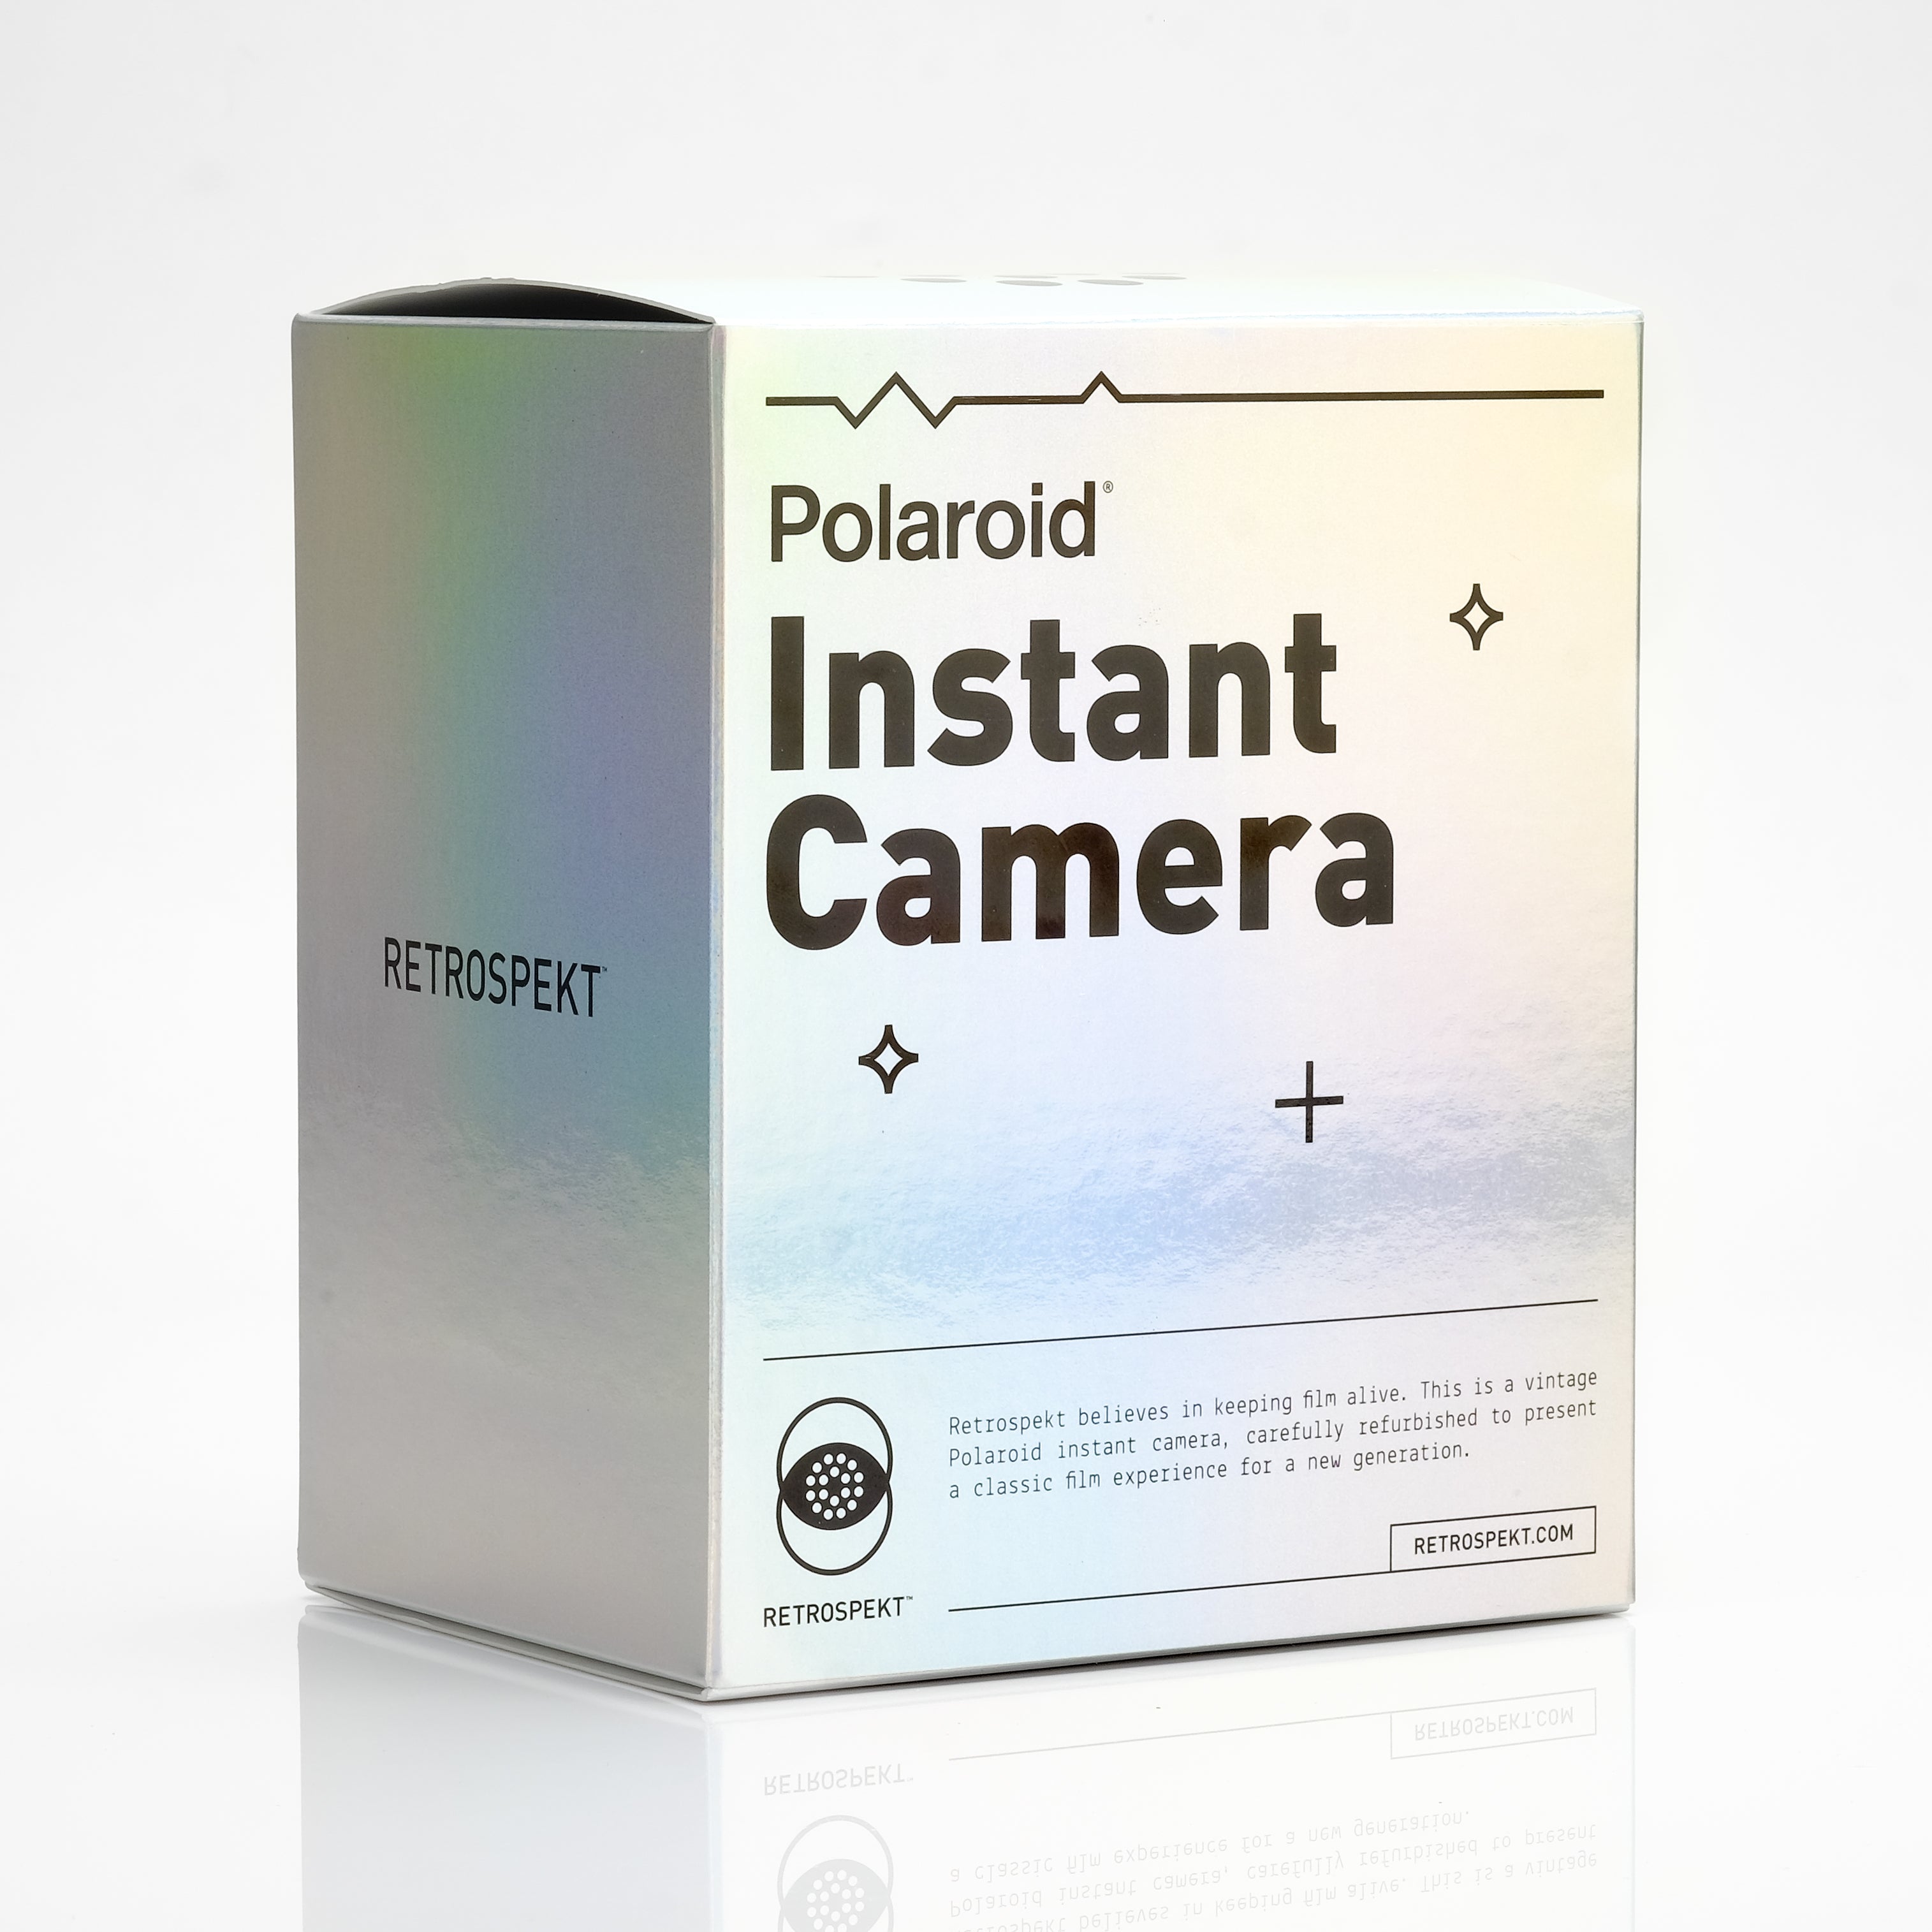 Polaroid 600 Camel Instant Film Camera